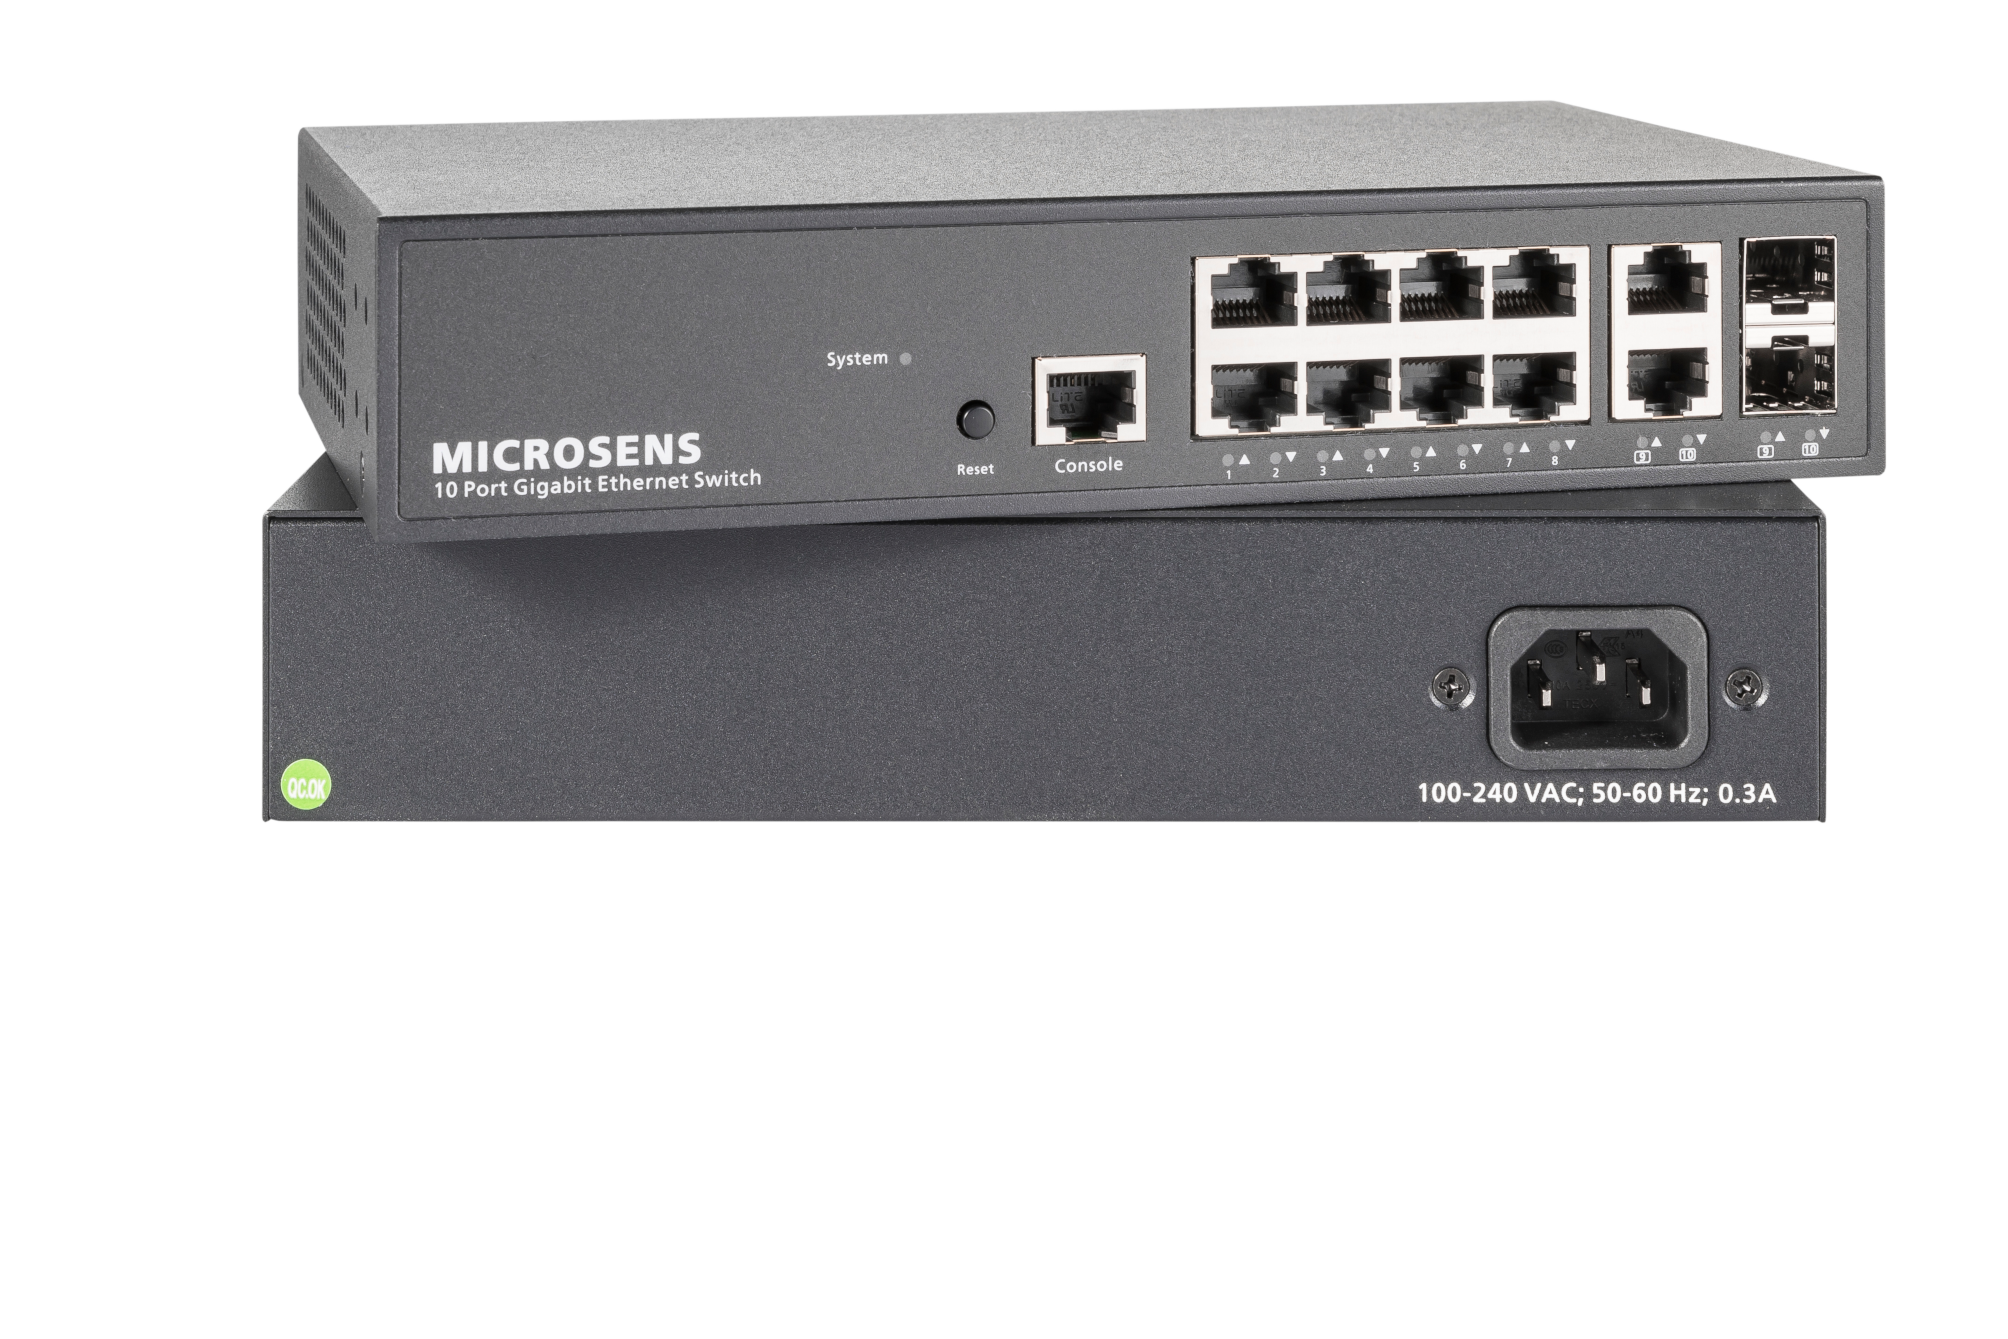 MICROSENS - 10-Port GbE Desktop Switch managed